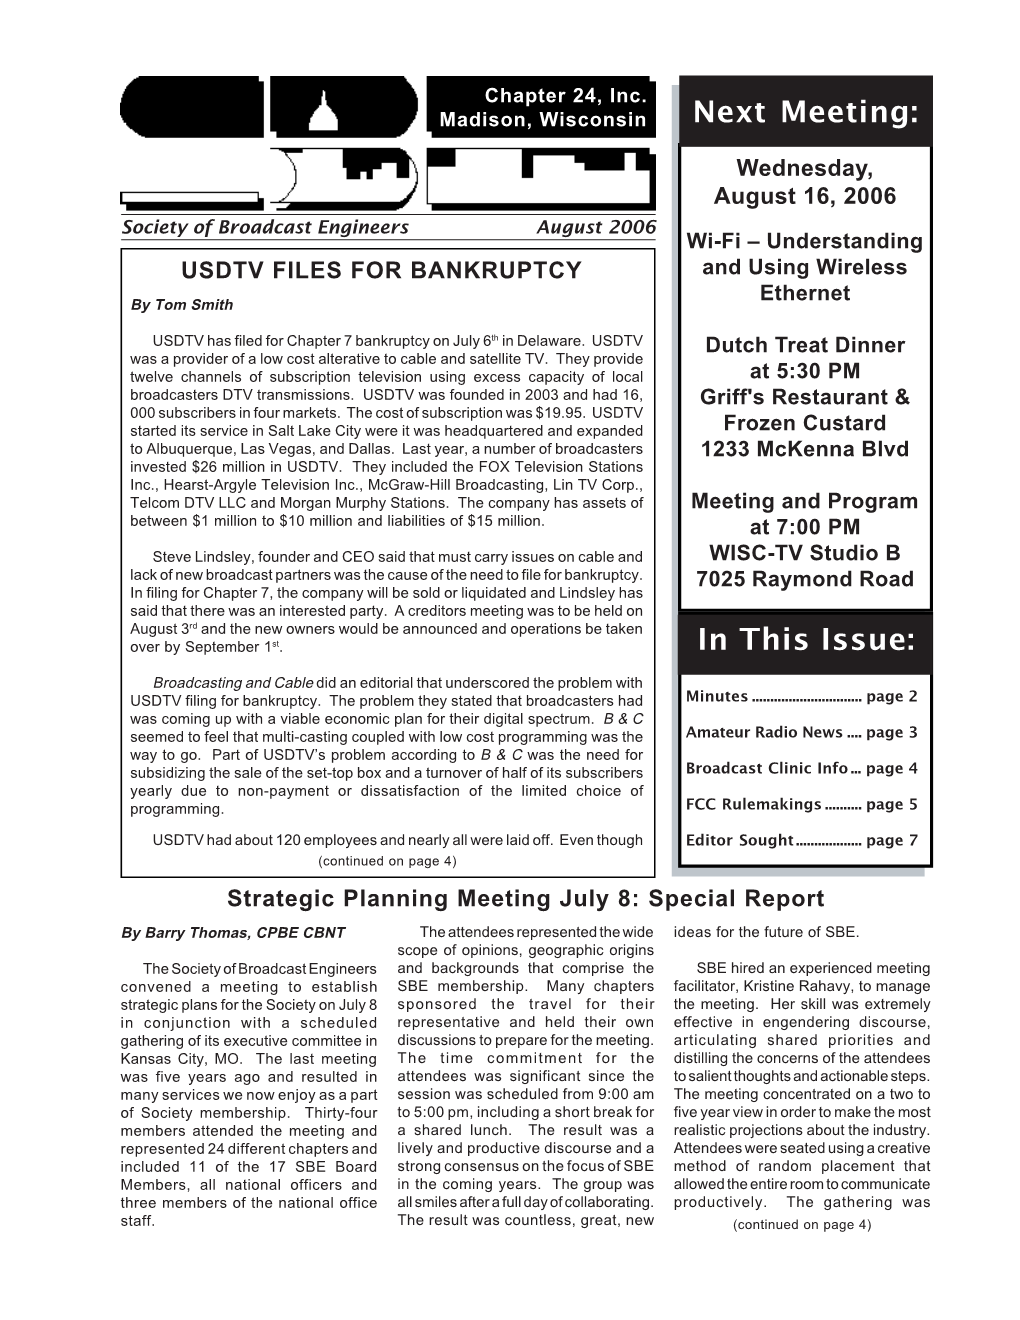 August 2006 Newsletter